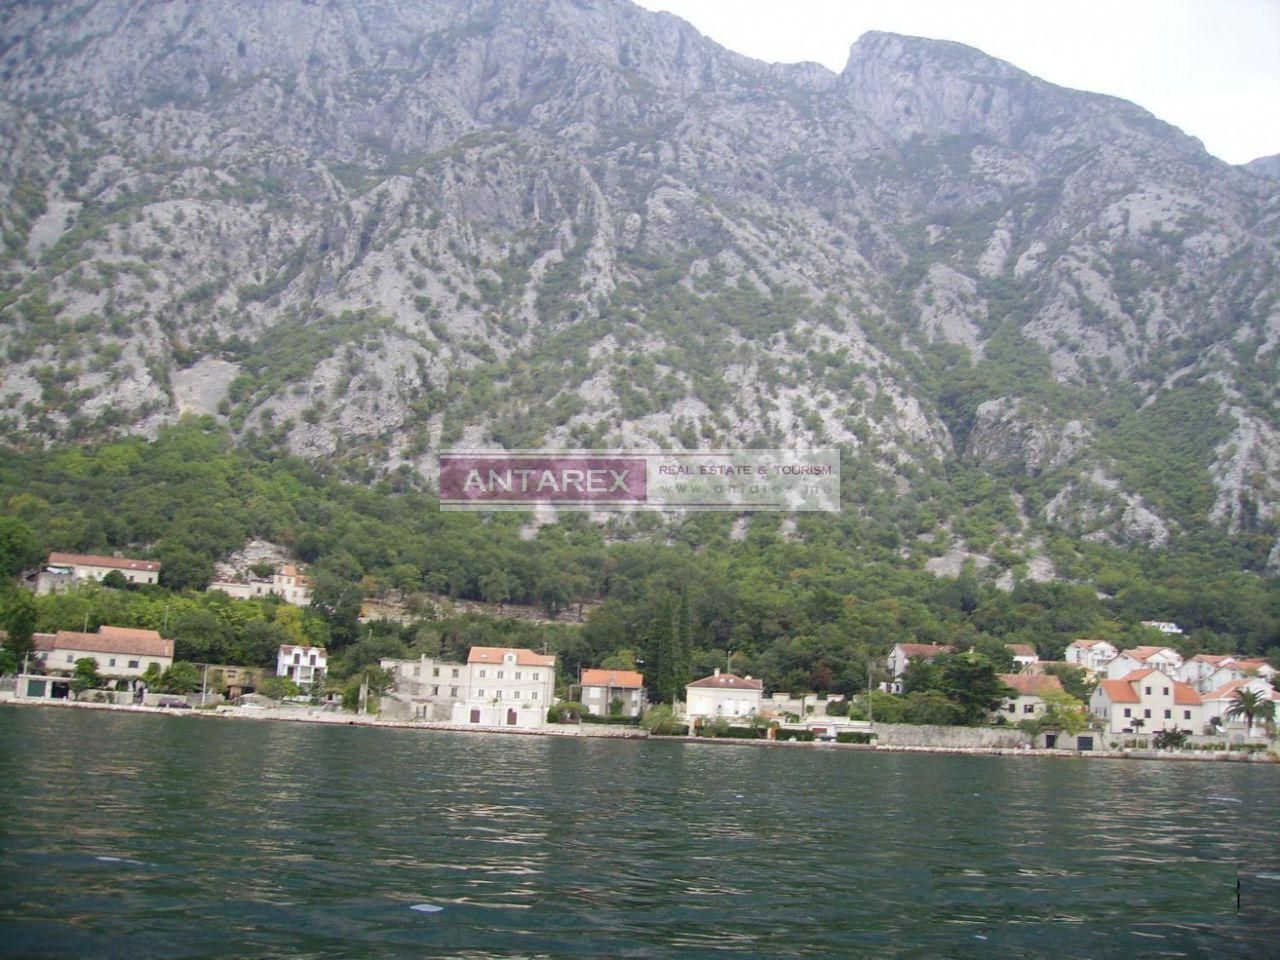 Land in Kotor, Montenegro - picture 1